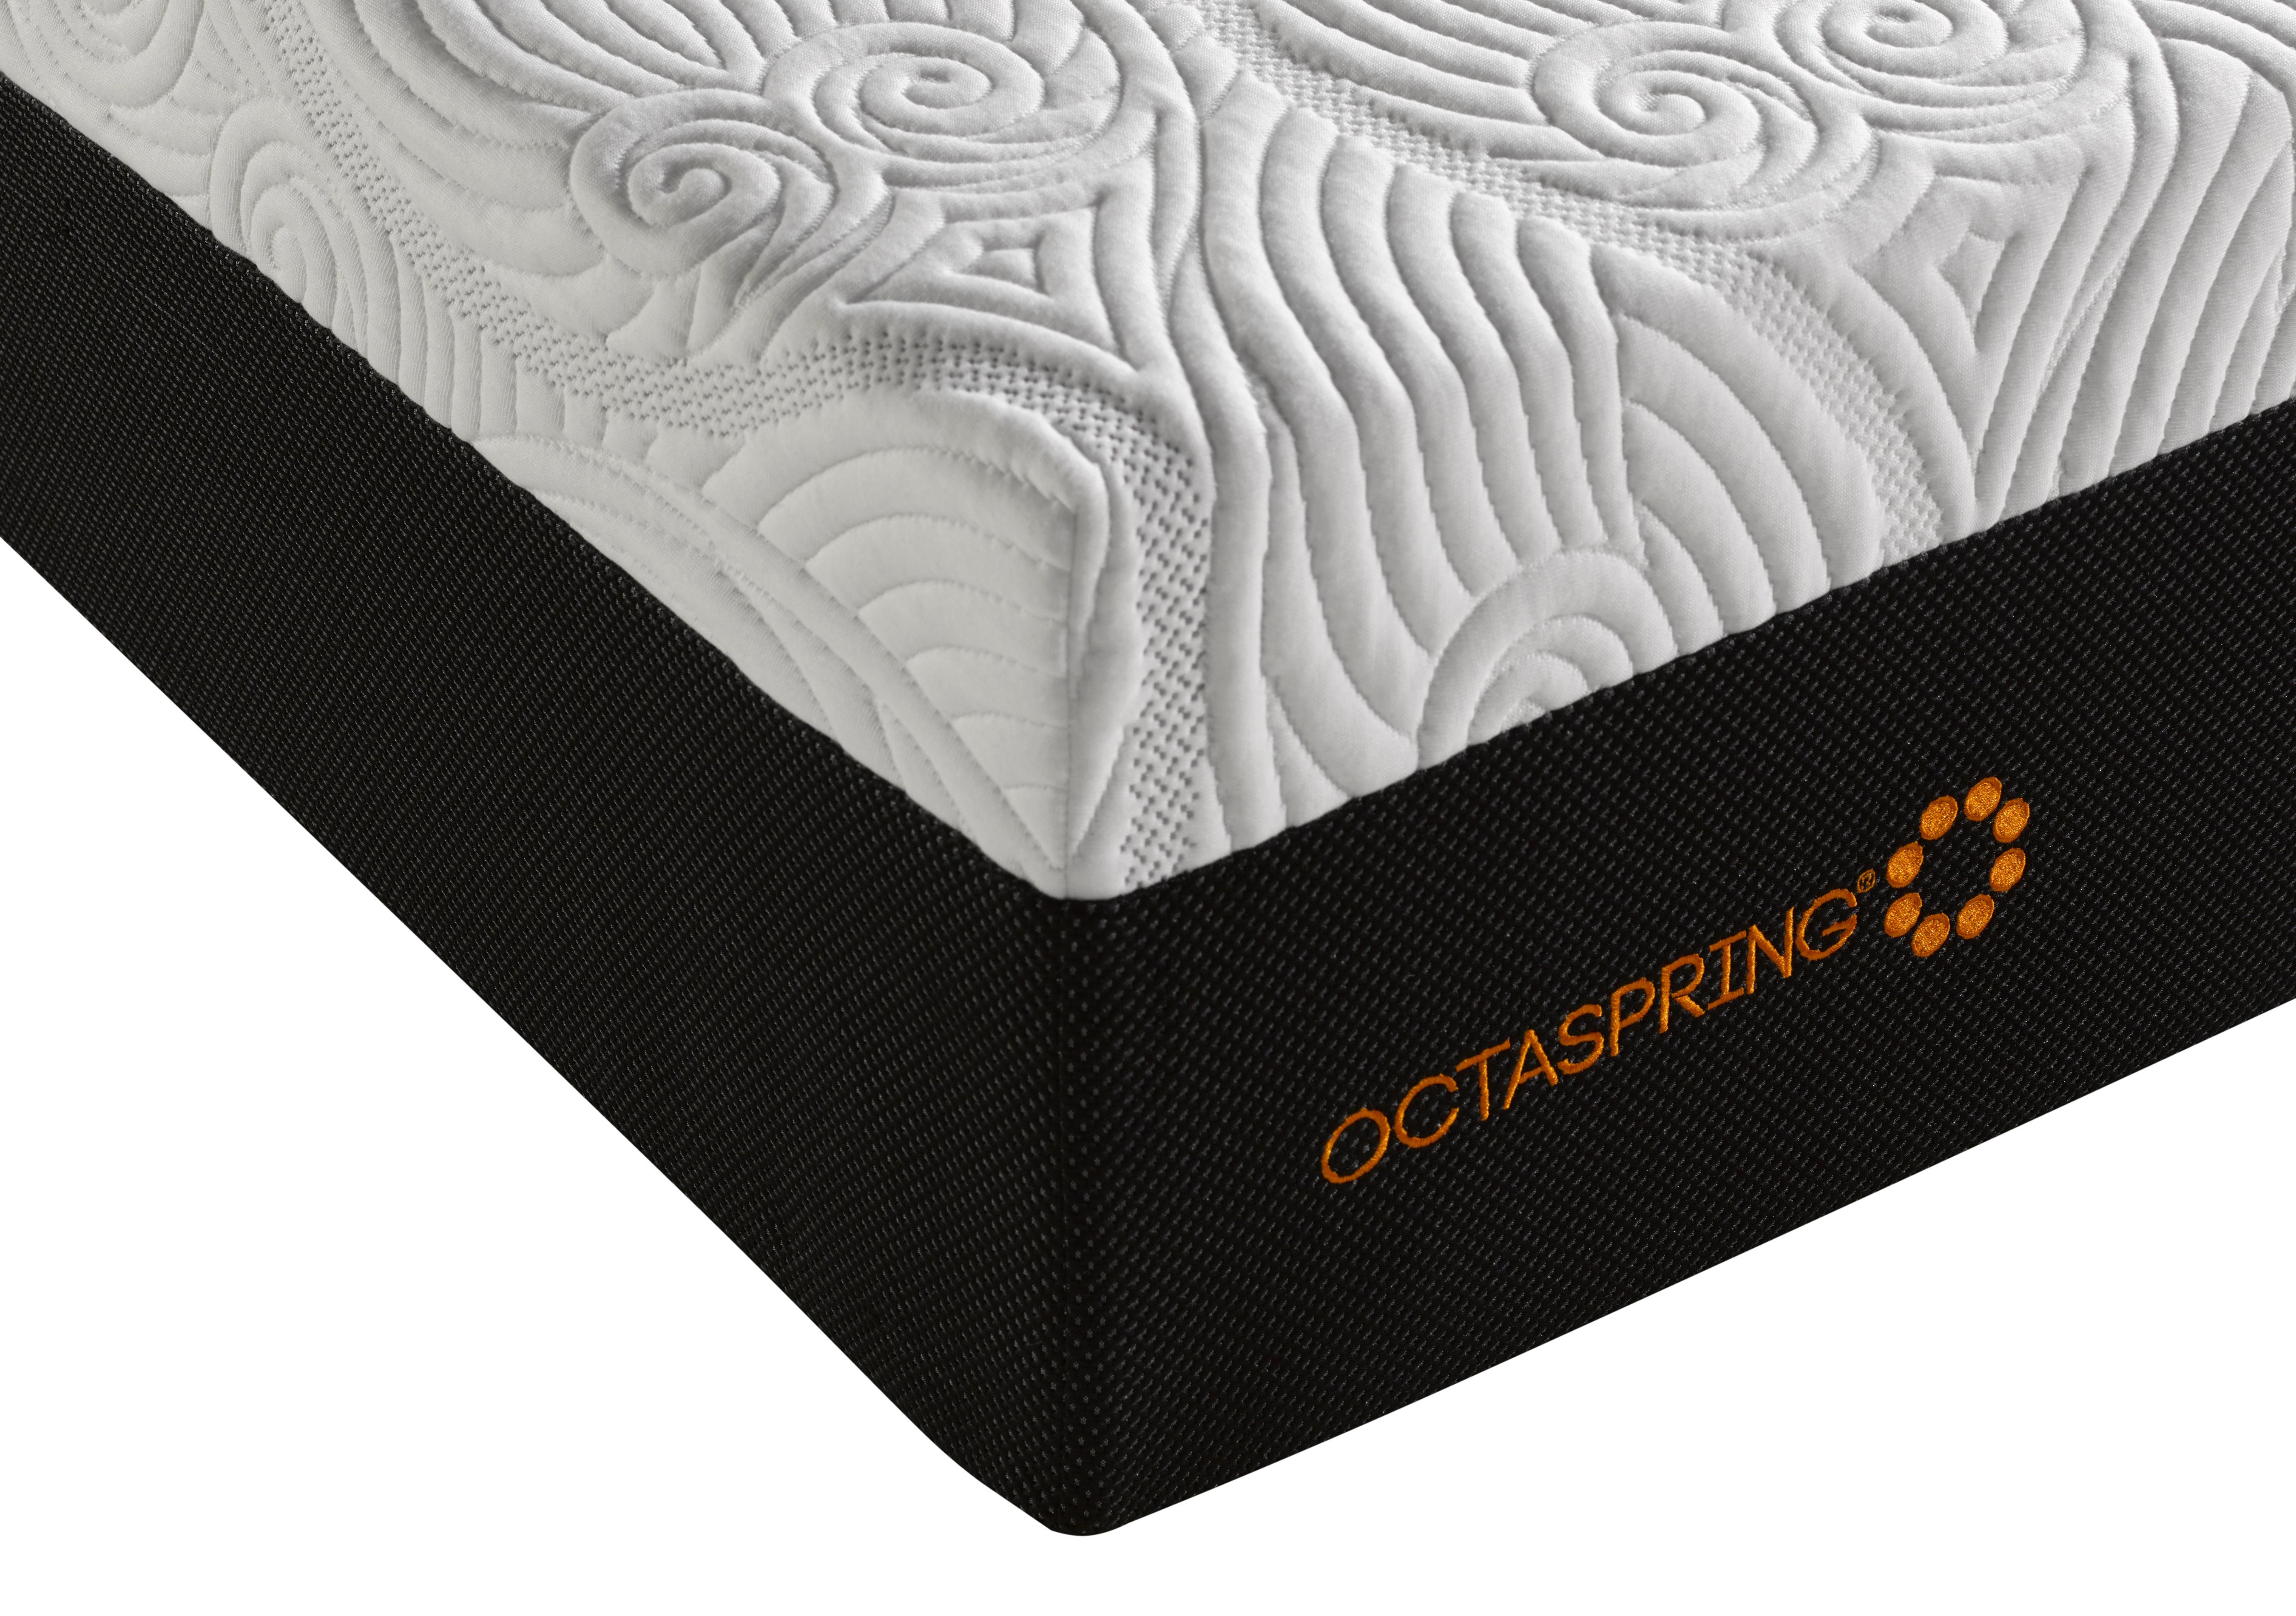 dormeo octaspring mattress for sale